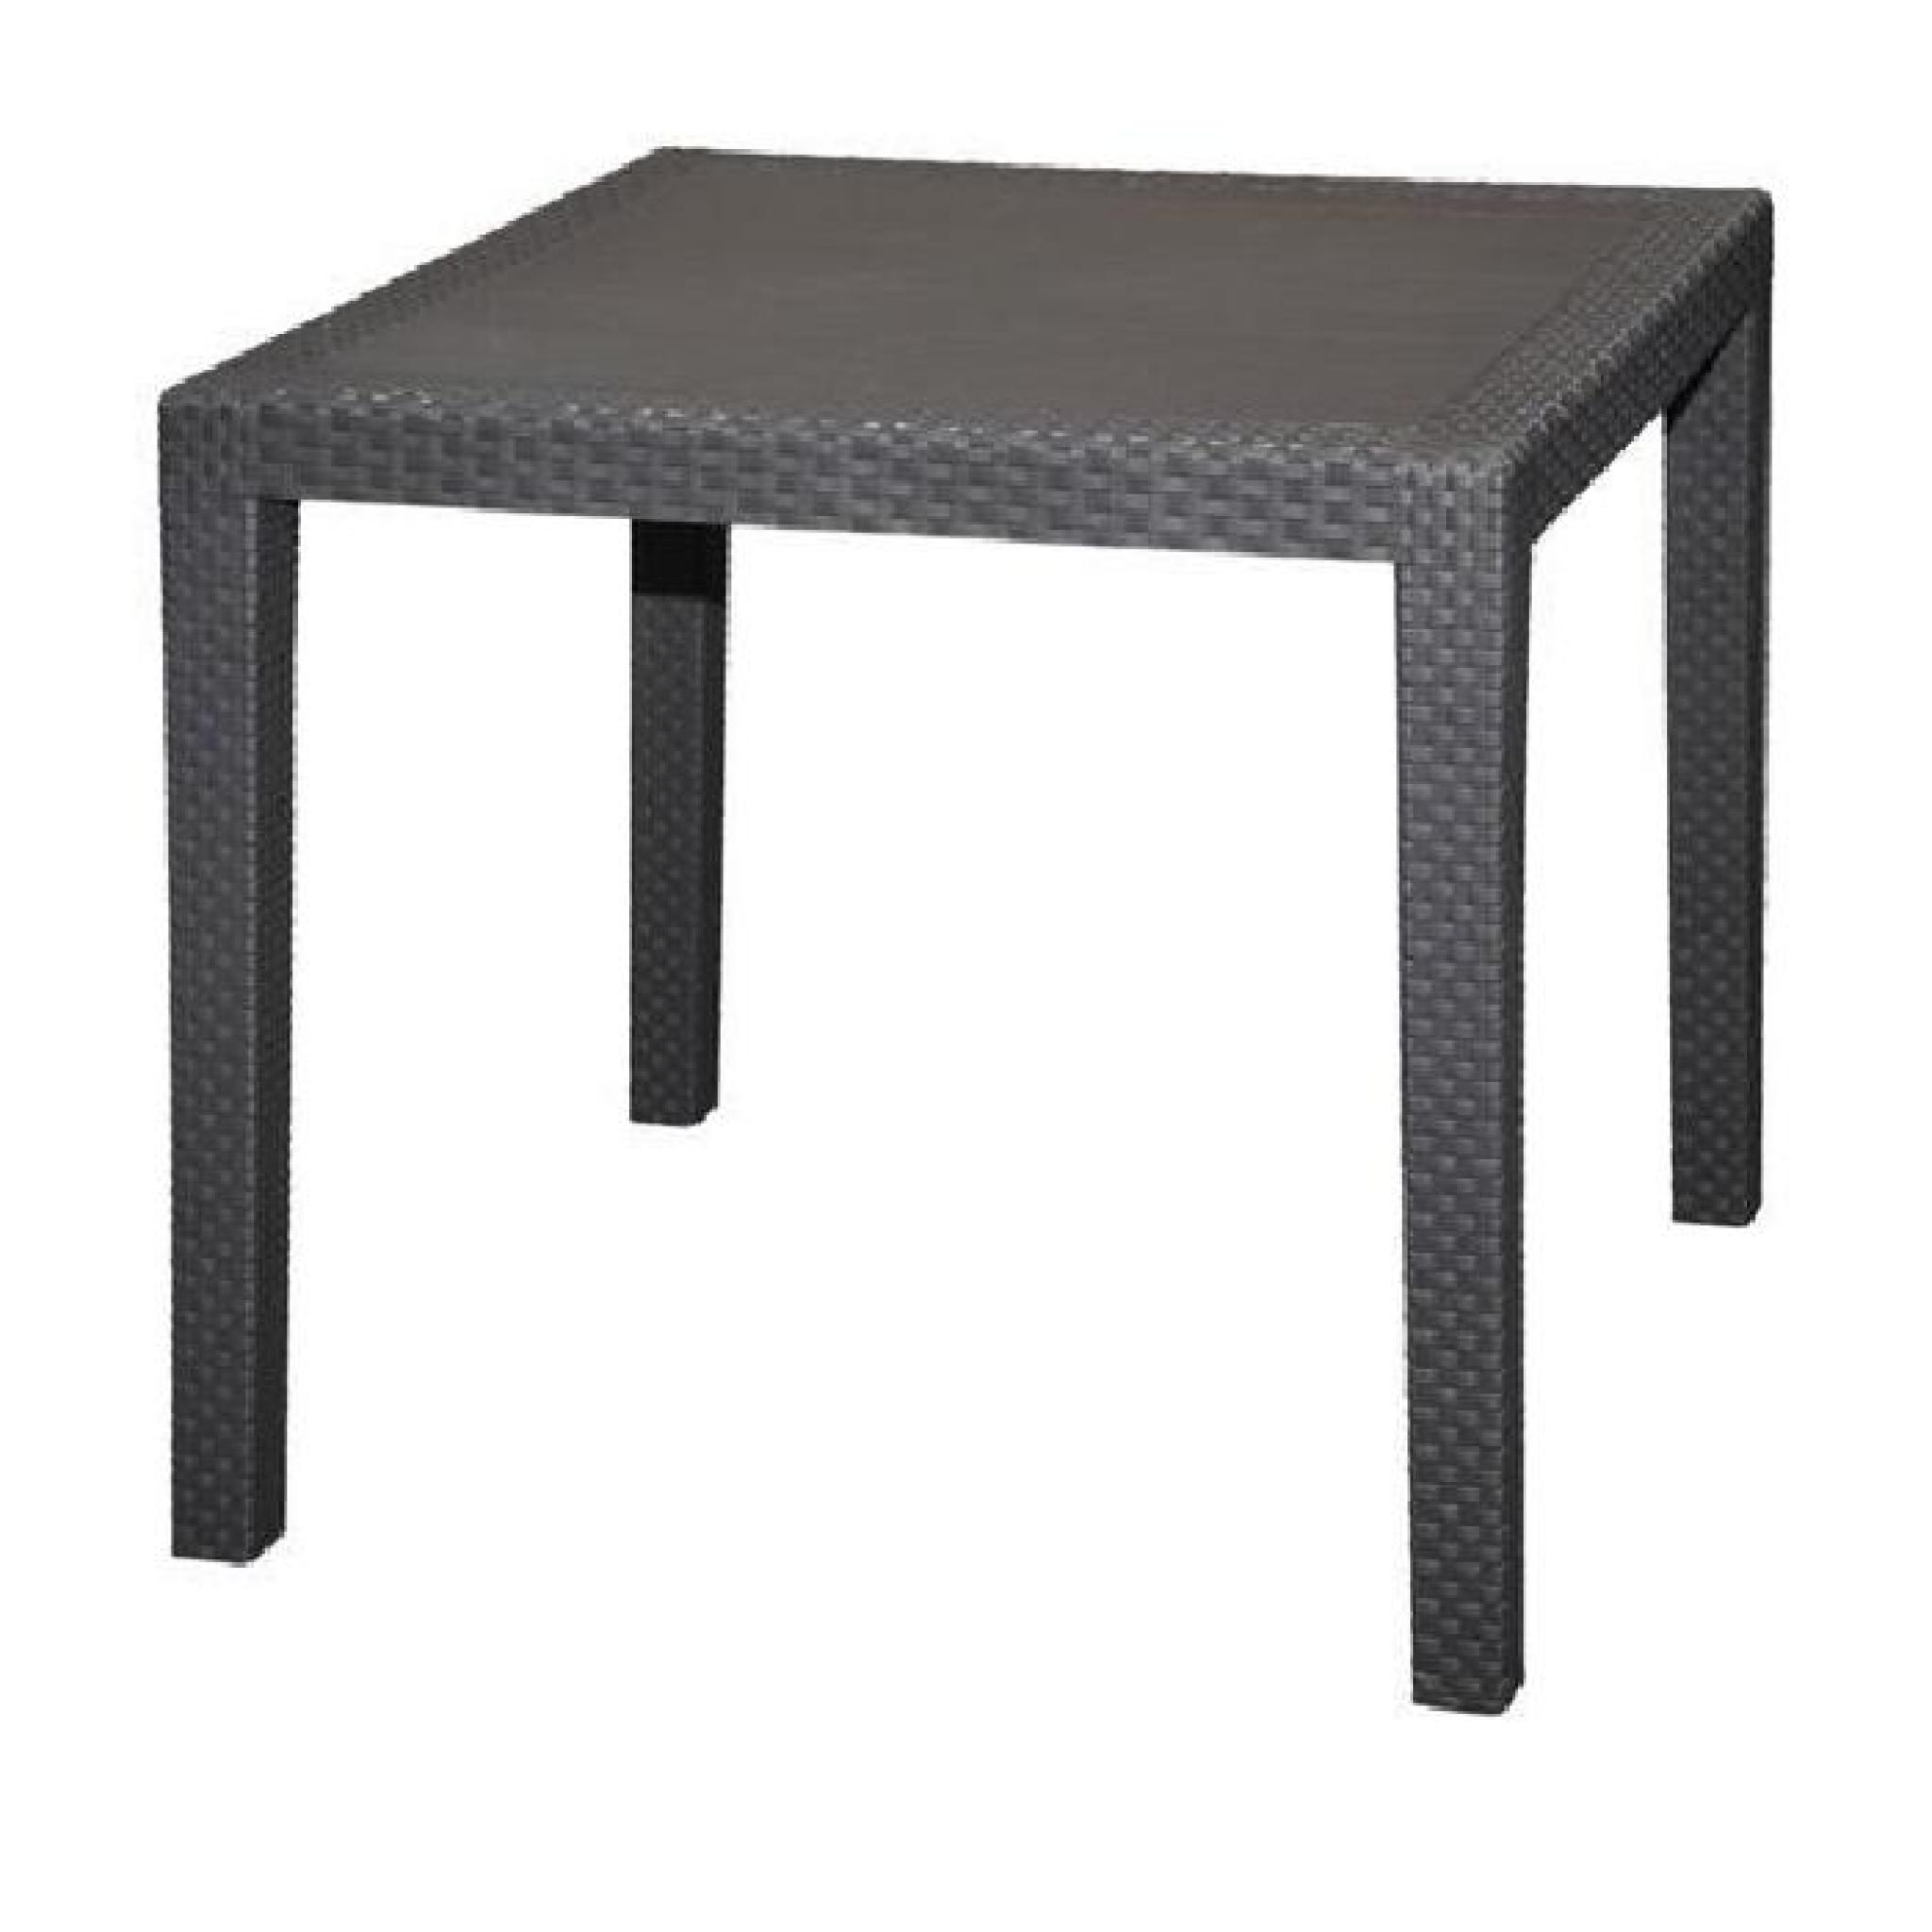 Table King PVC 79 x 79 cm Noir